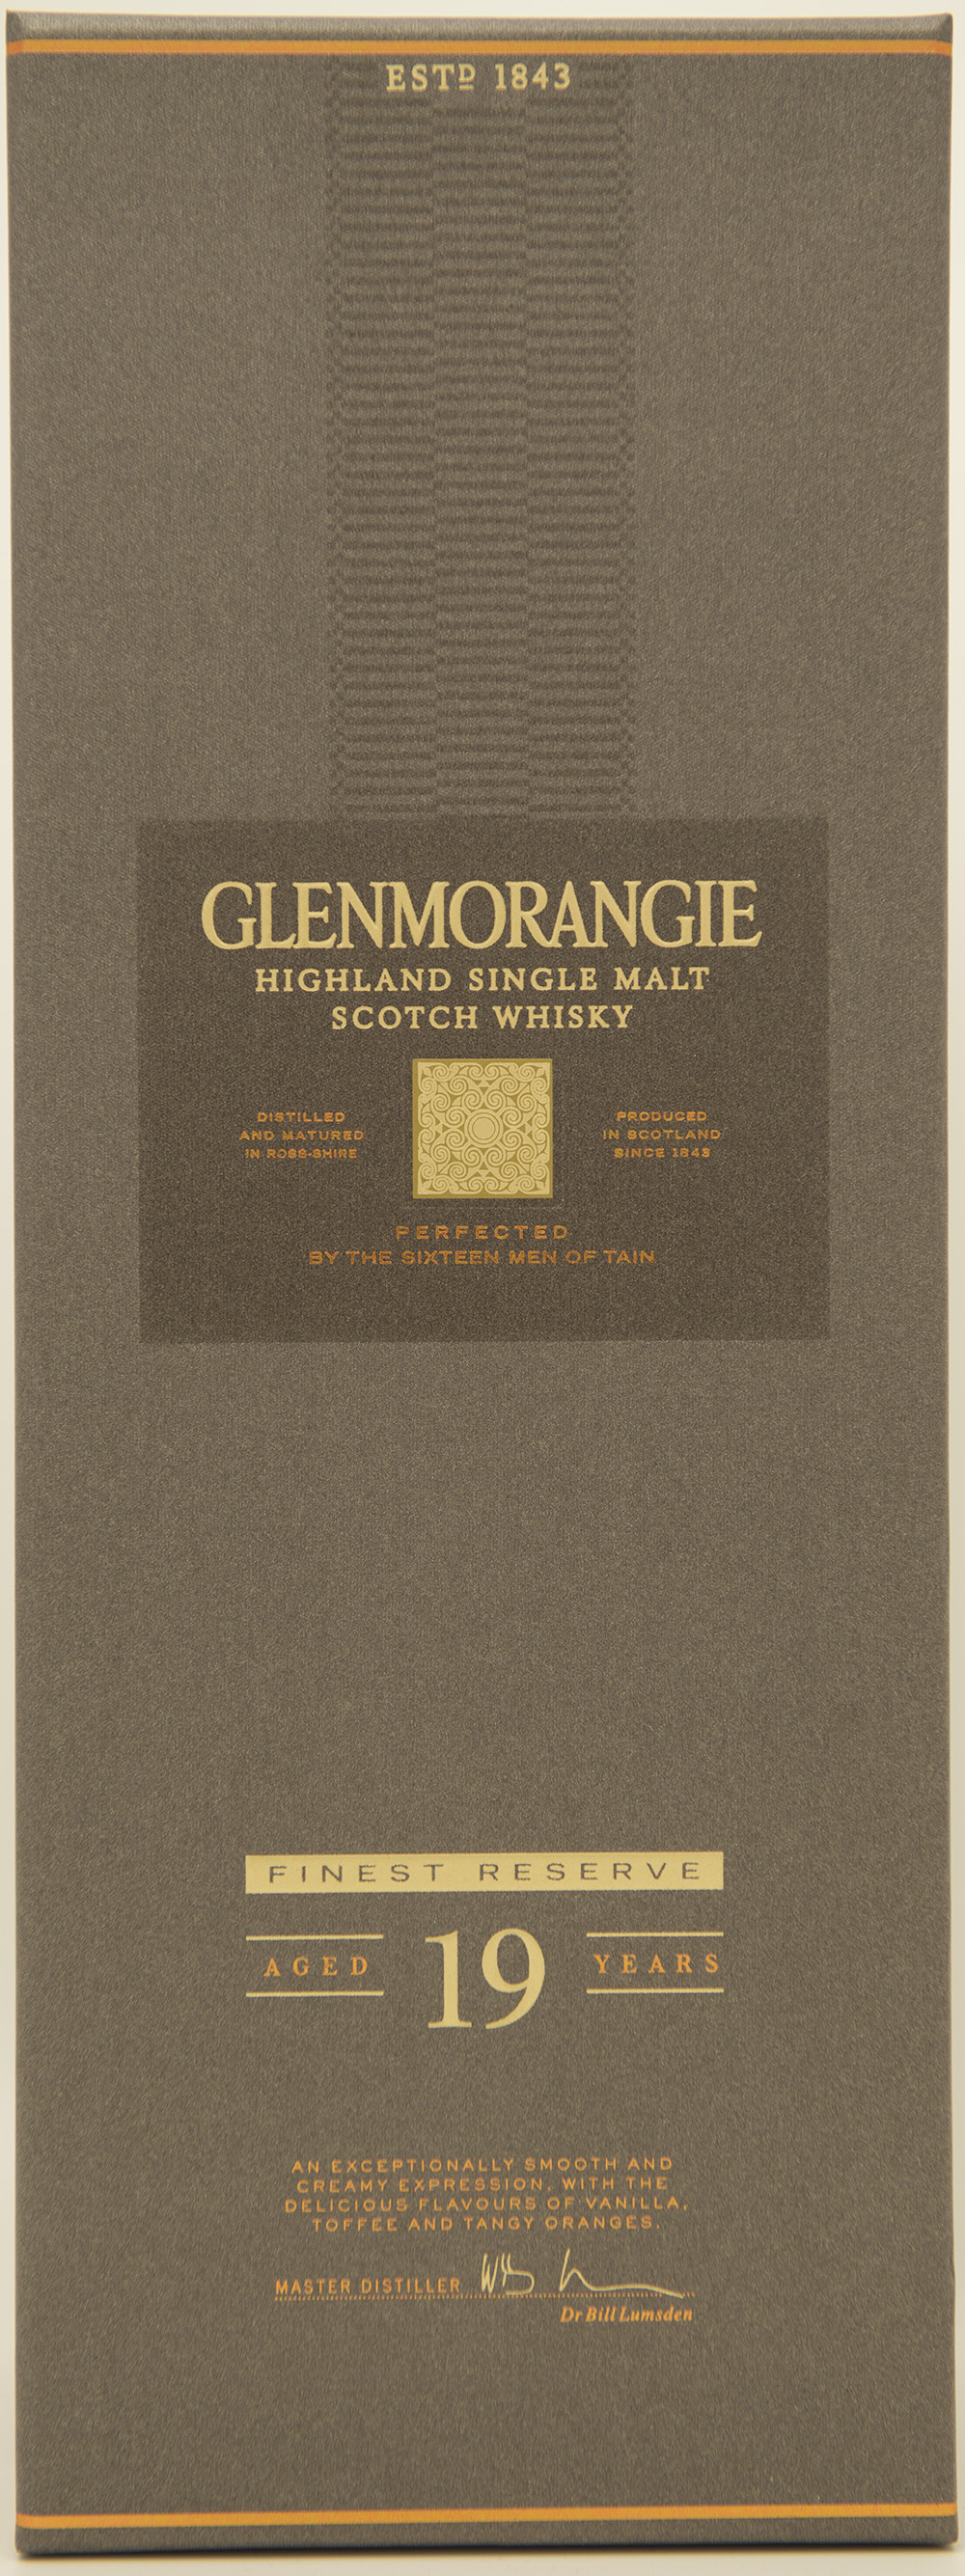 Billede: DSC_3715 - Glenmorangie 19 Finest Reserve (box front).jpg